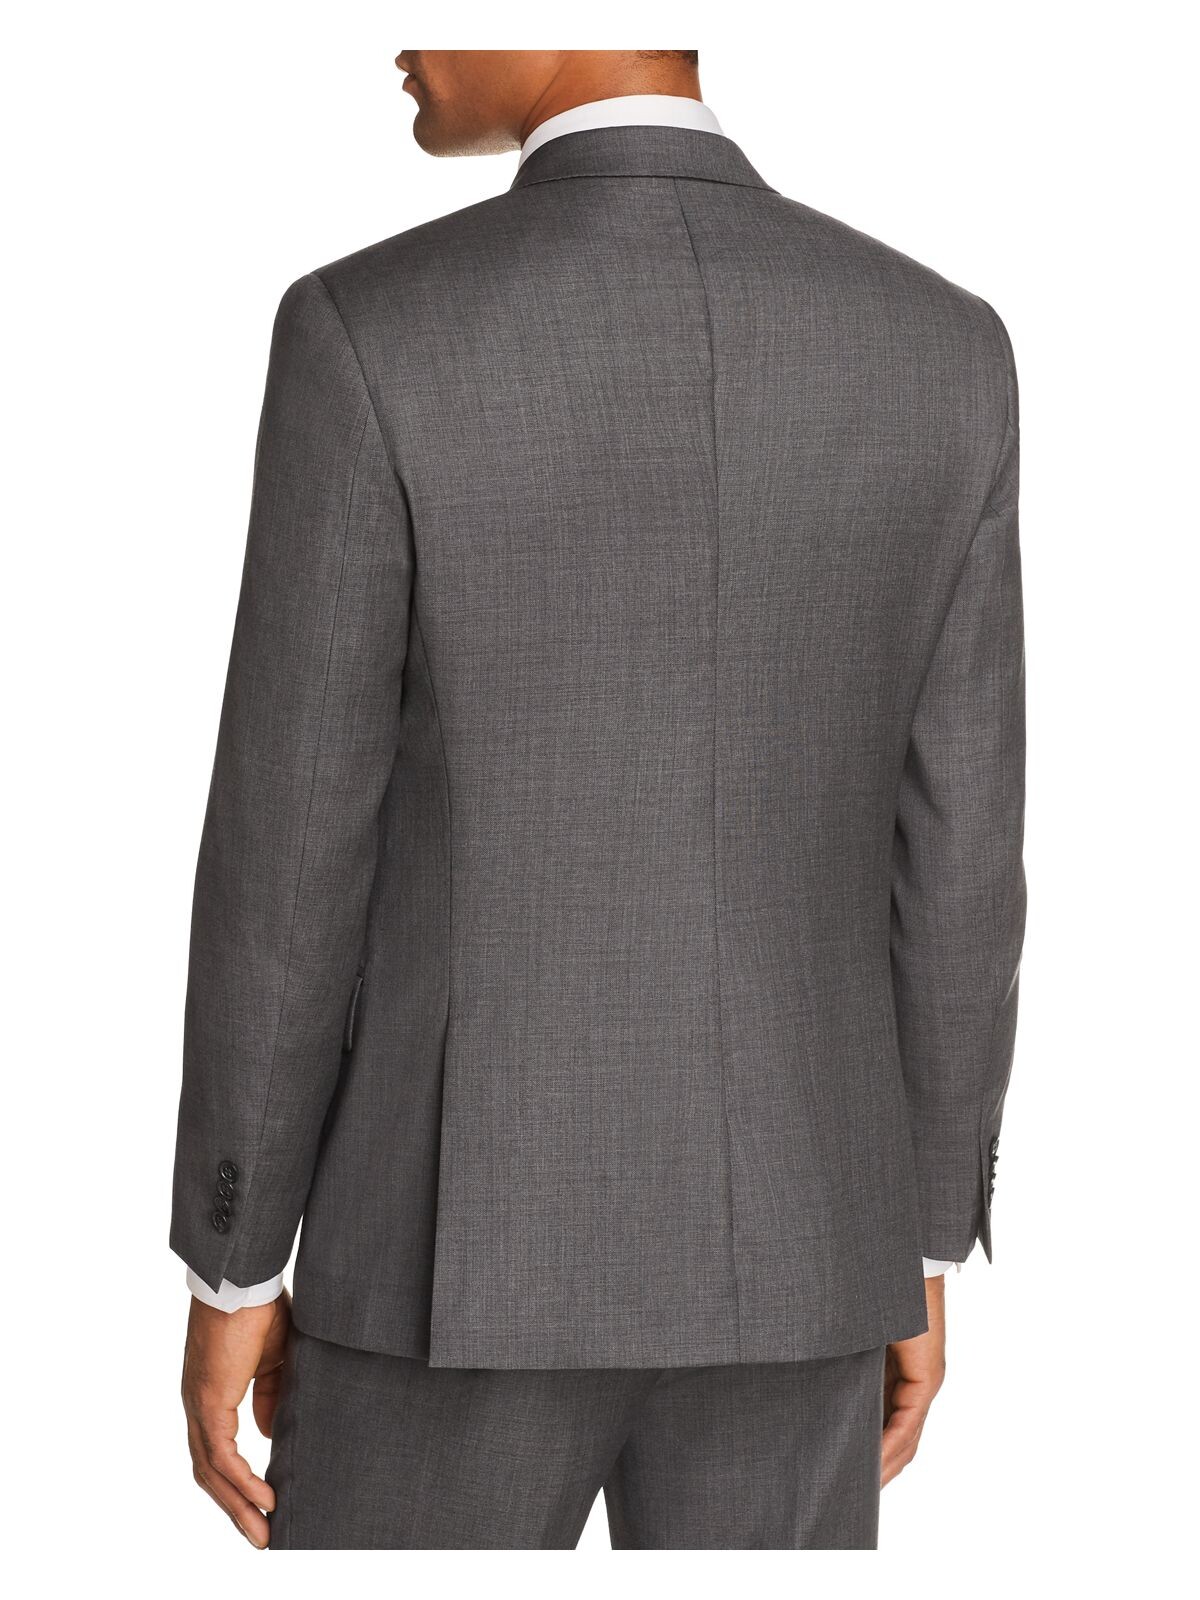 MICHAEL KORS Mens Sharkskin Gray Single Breasted, Classic Fit Wool Blend Blazer 40 - image 2 of 4